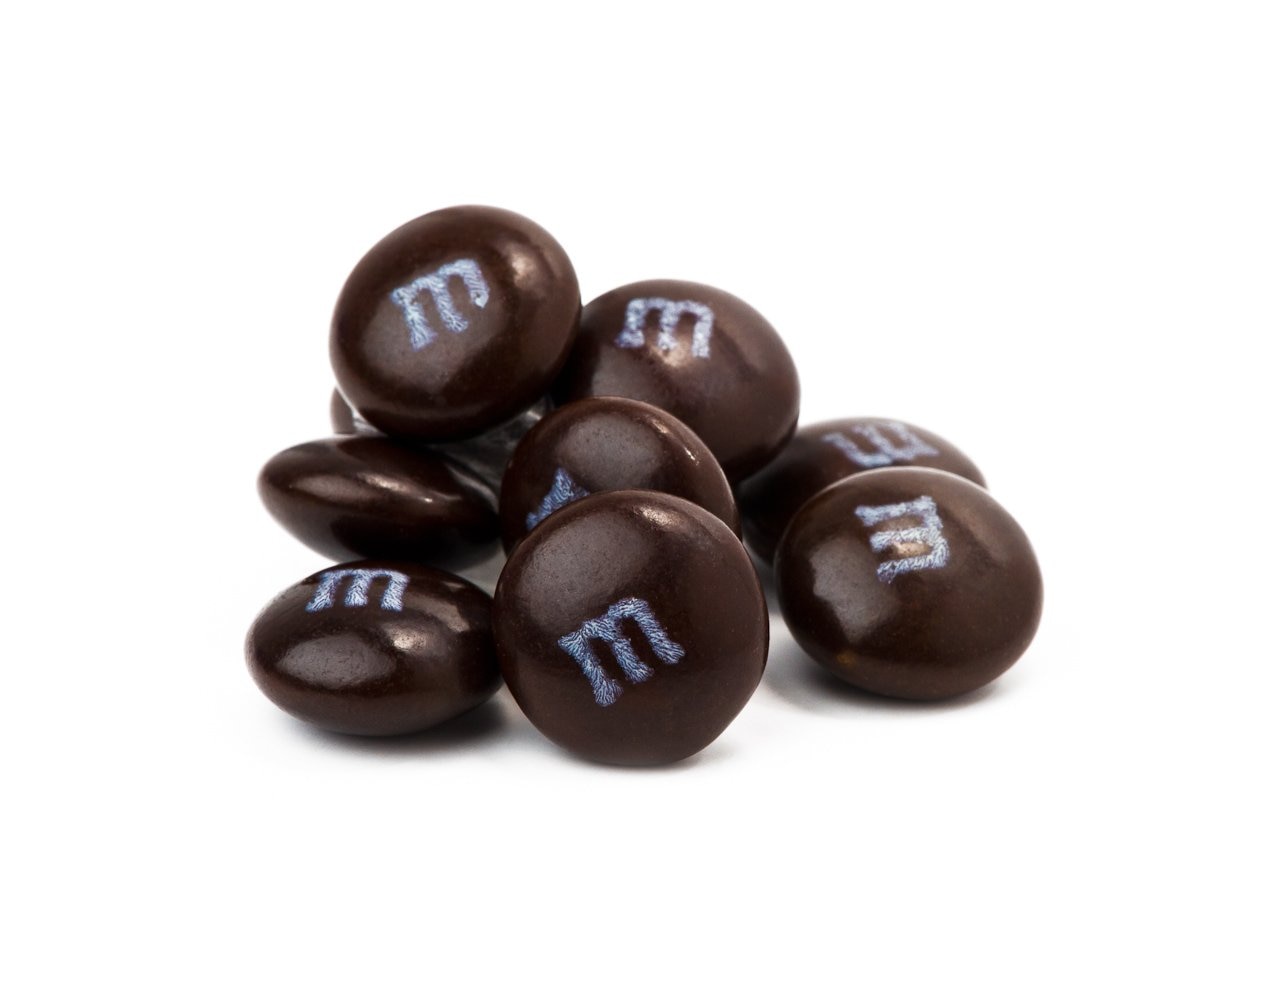 Null s brown. M MS коричневый. Коричневая m&m`s. Mms коричневый. М М конфеты.